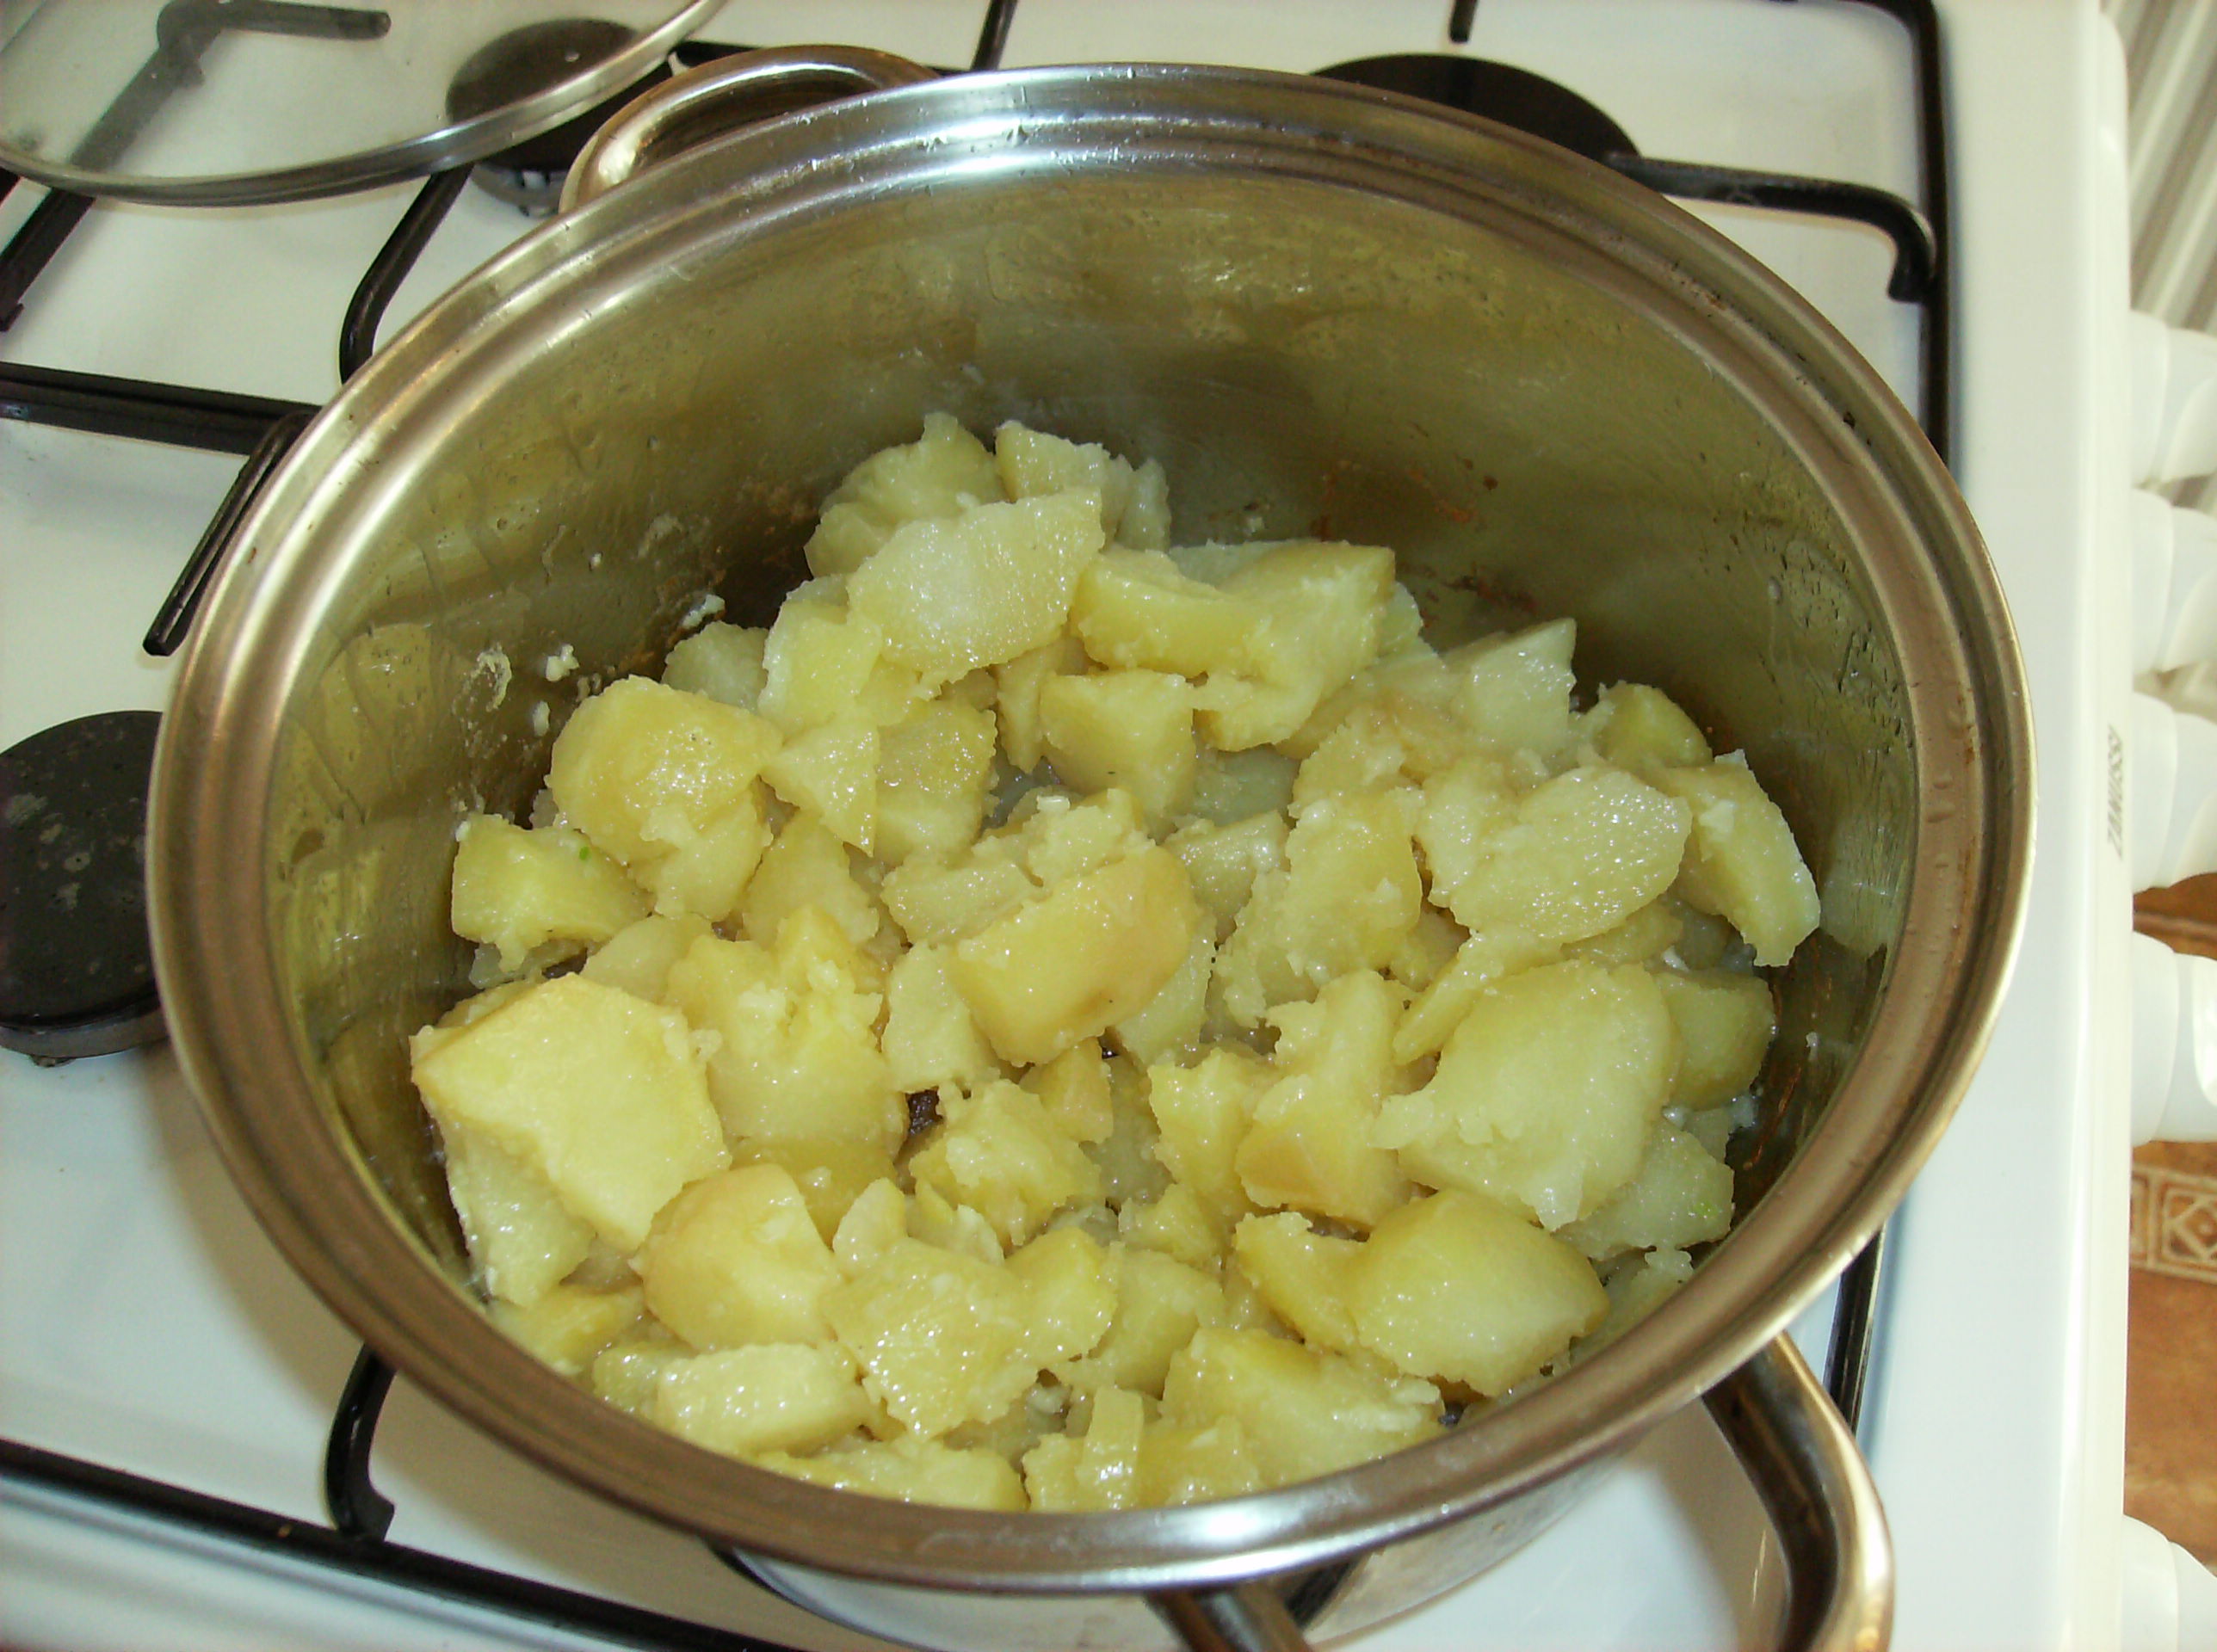 Salata de varza si cartofi